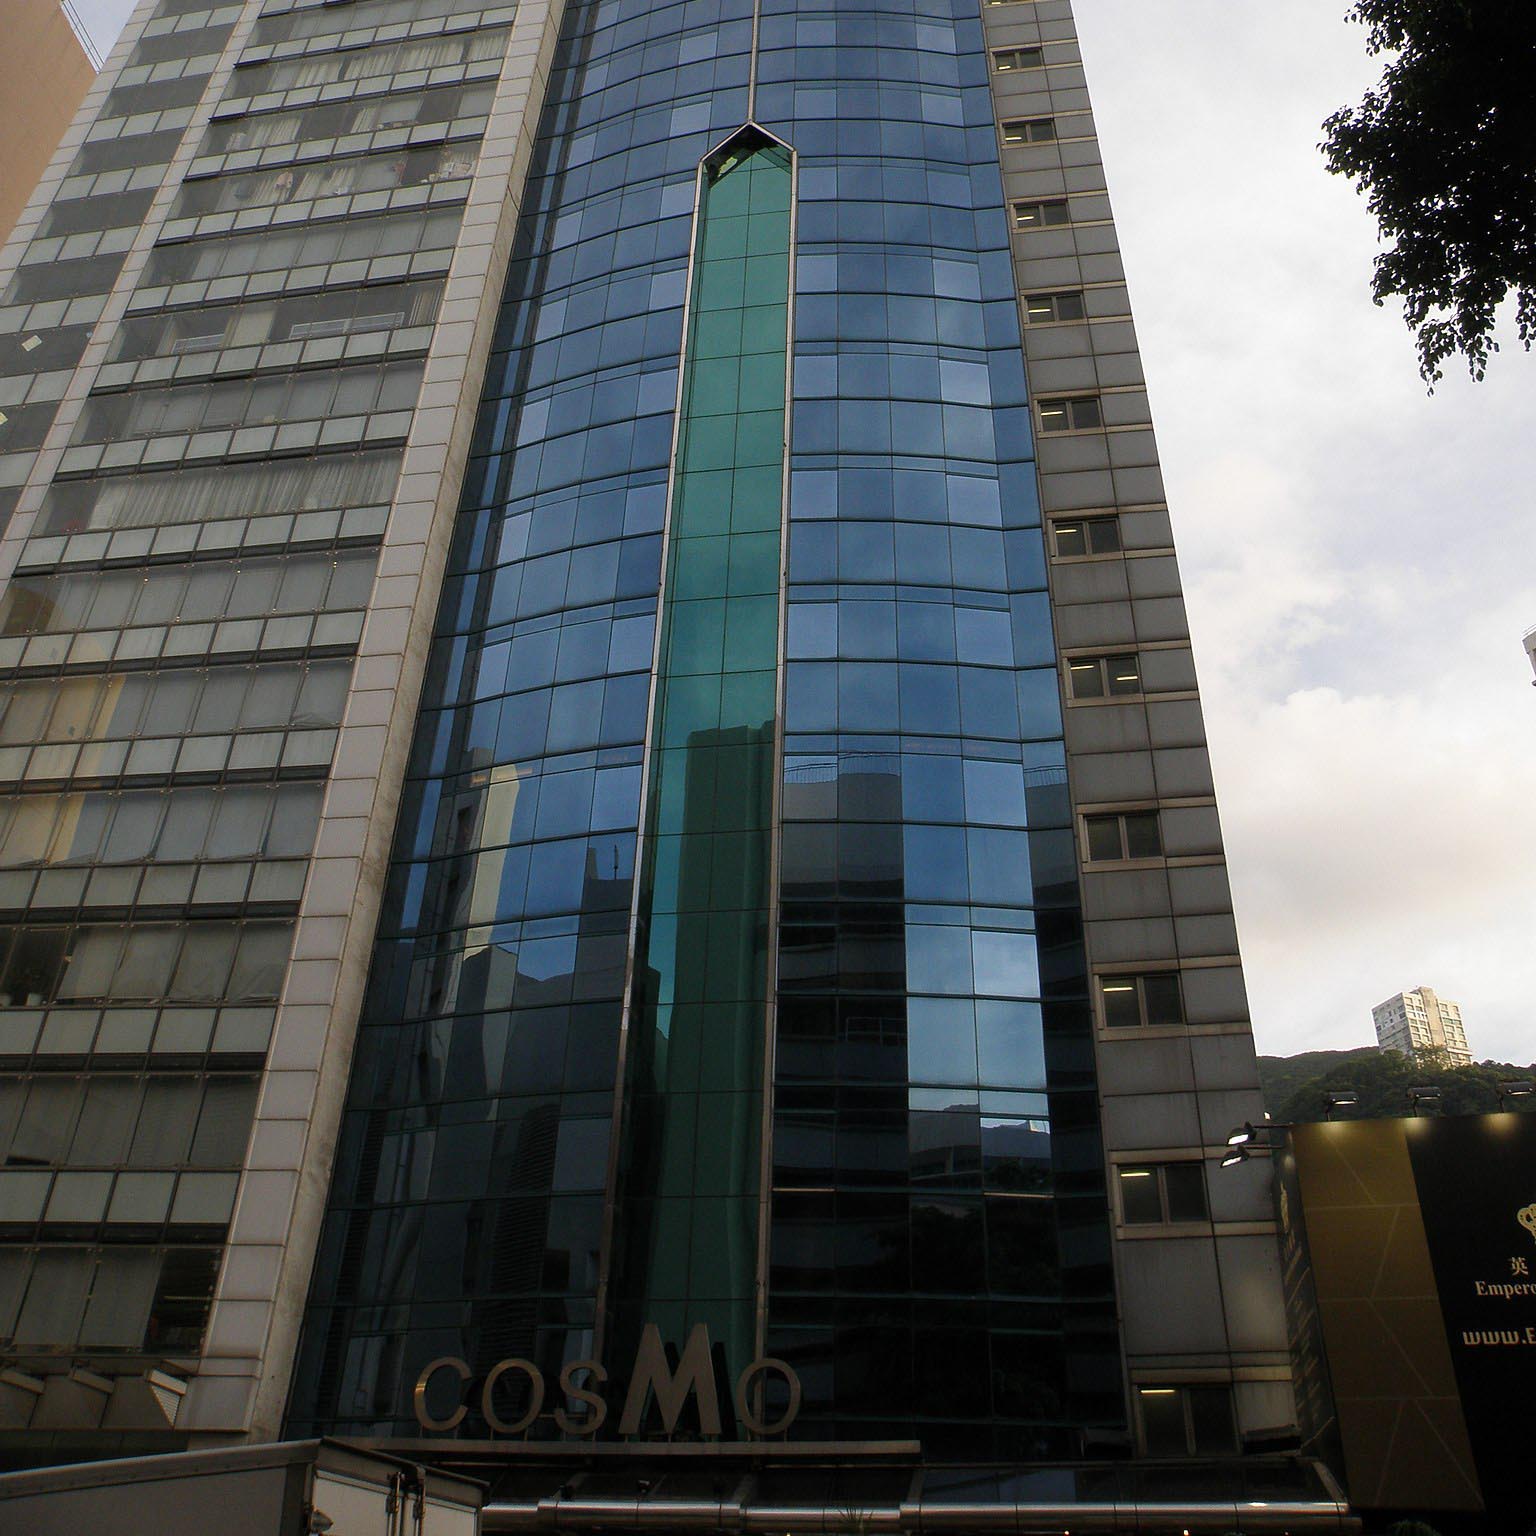 COSMO HOTEL HONG KONG